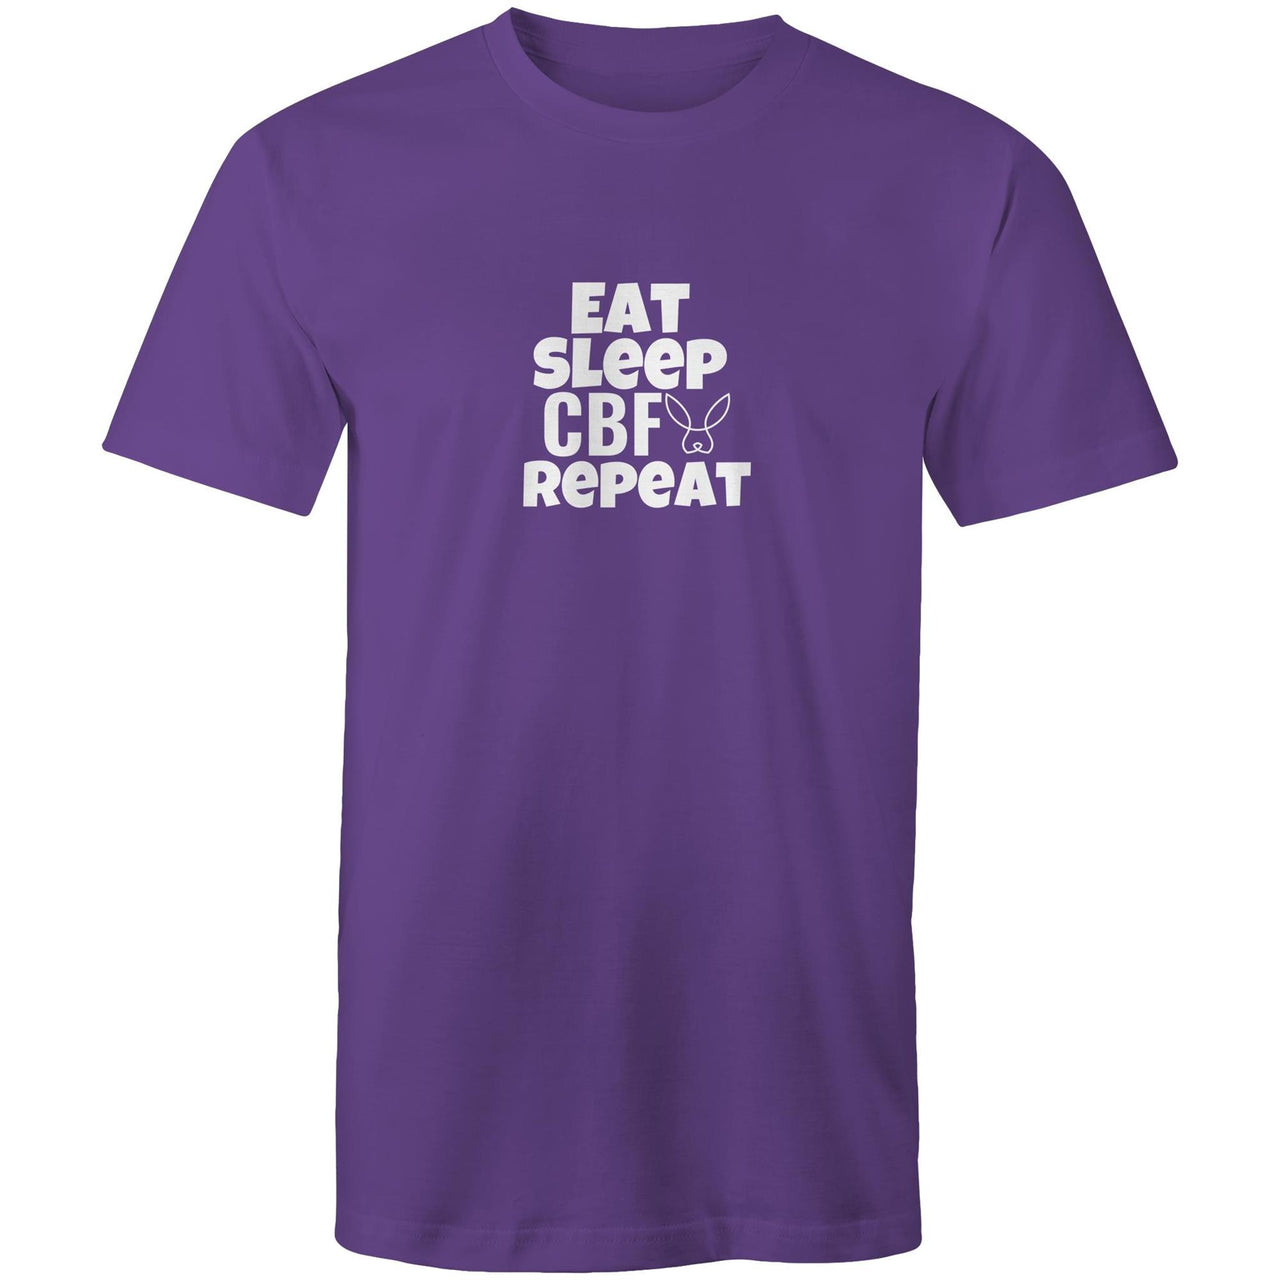 Eat Sleep CBF Repeat Crew Purple T-Shirt by CBF Clothing